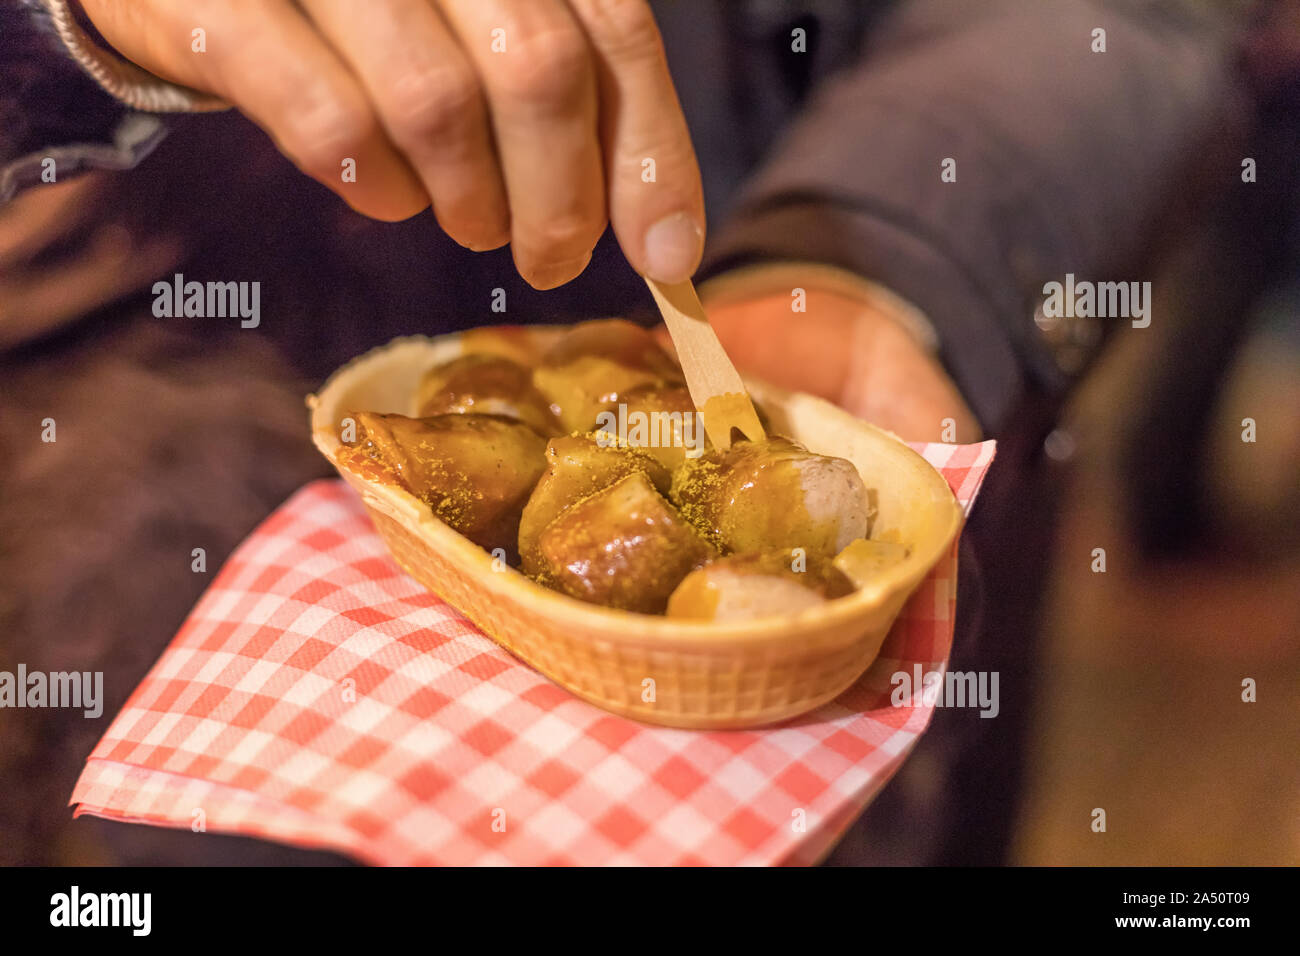 german fast food curried sausage Stock Photo